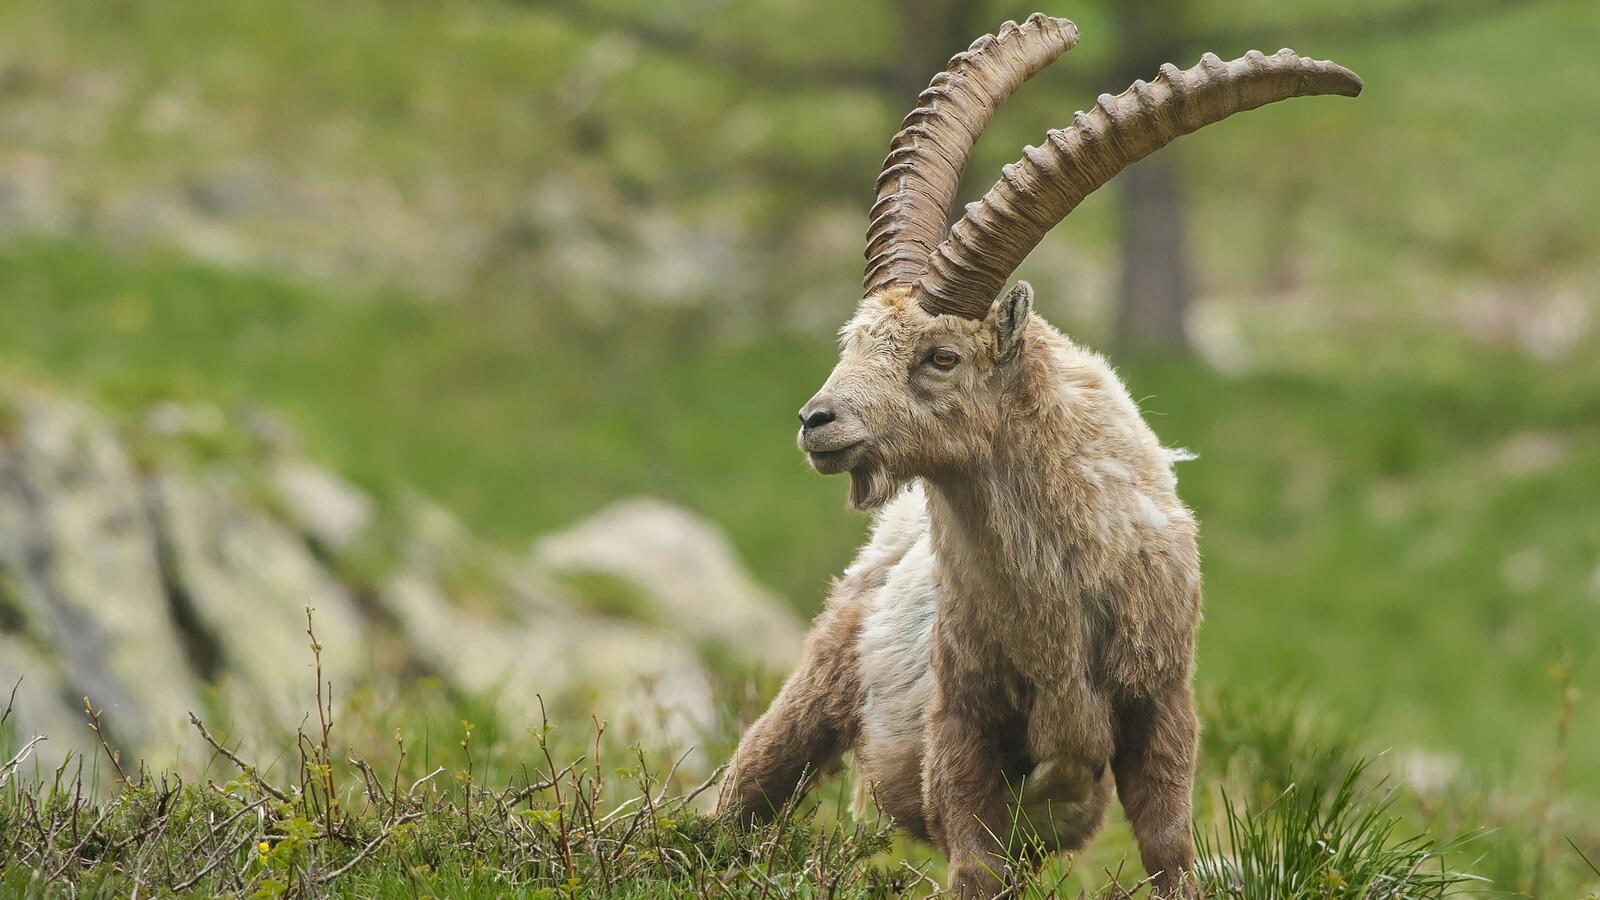 Wallpapers mountain goat horns on the desktop